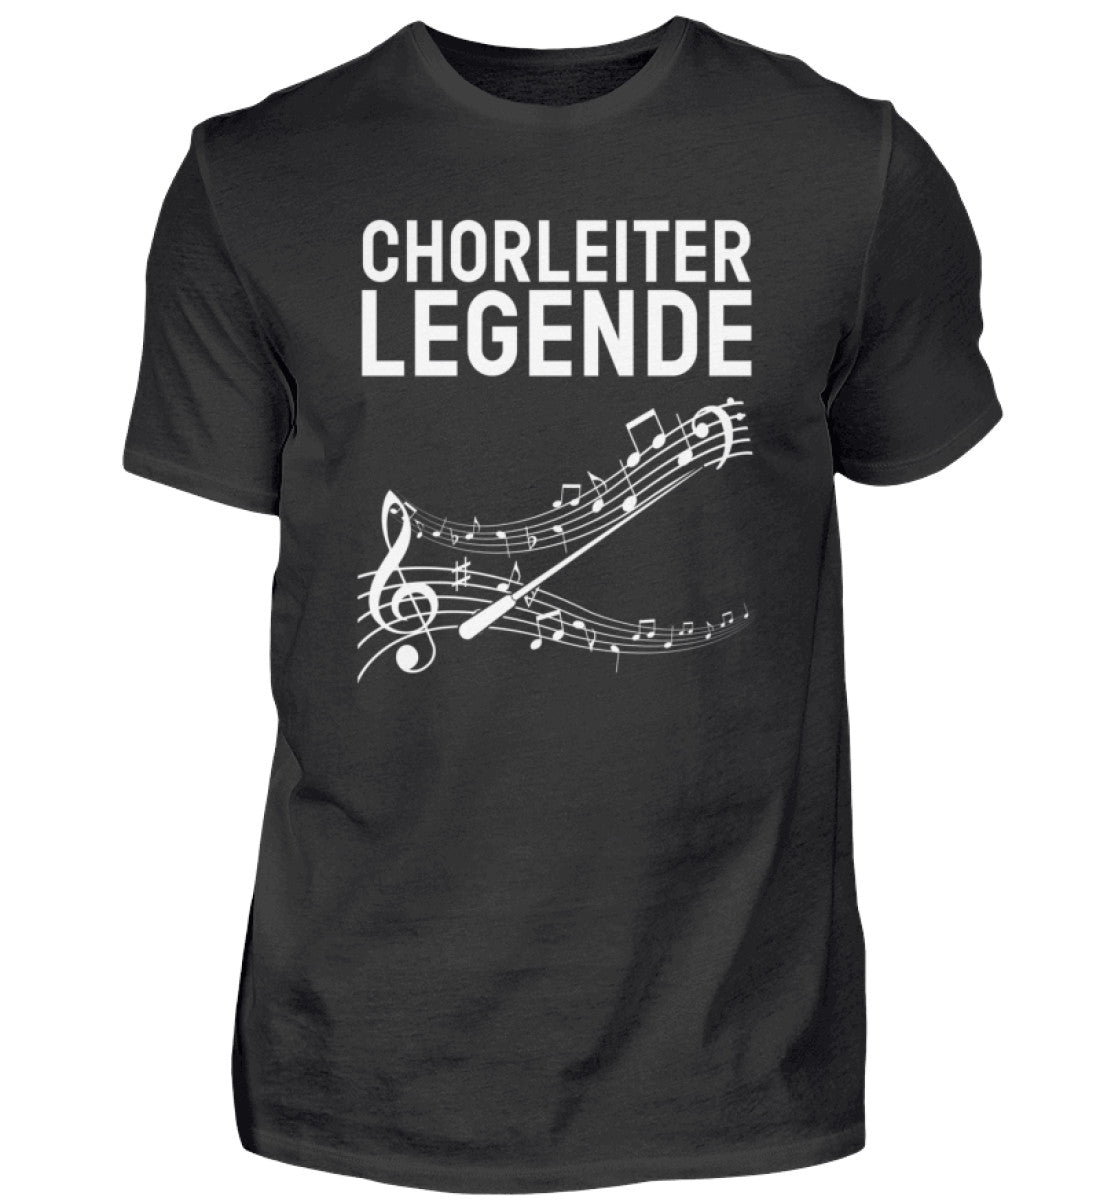 Chorleiter Legende T-Shirt